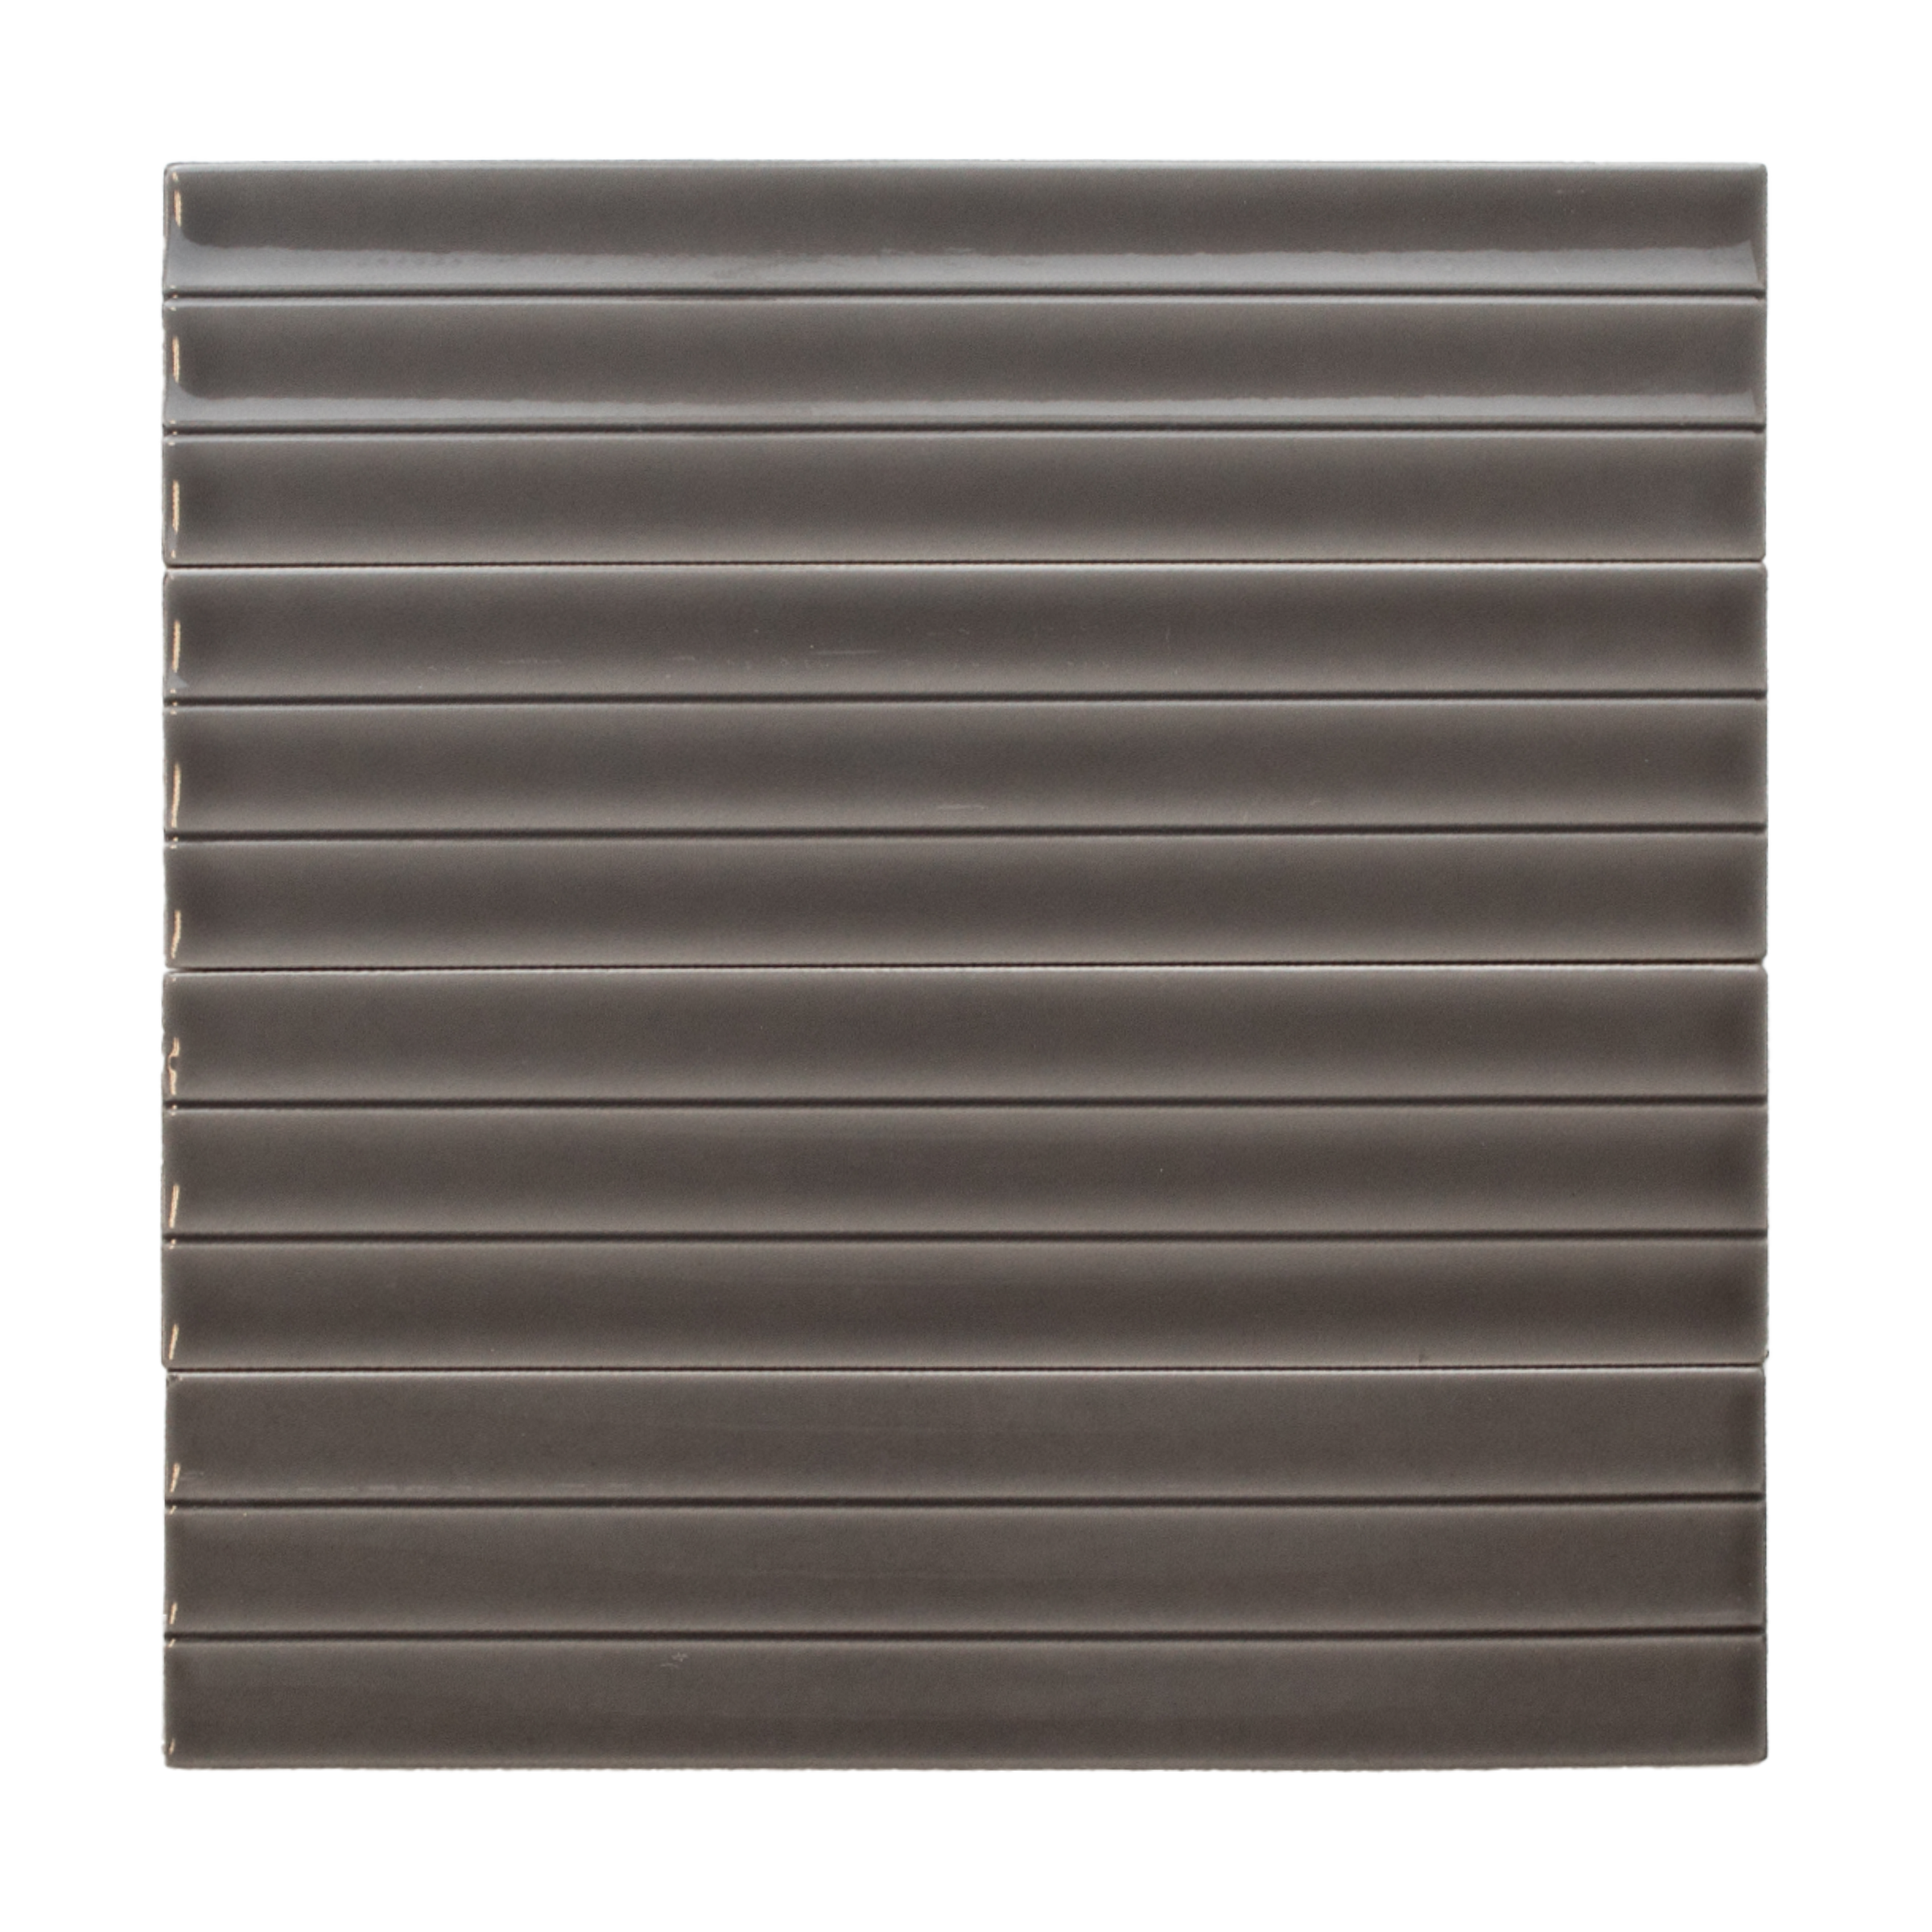 Relief Slate Grey Flat Ceramic Tile